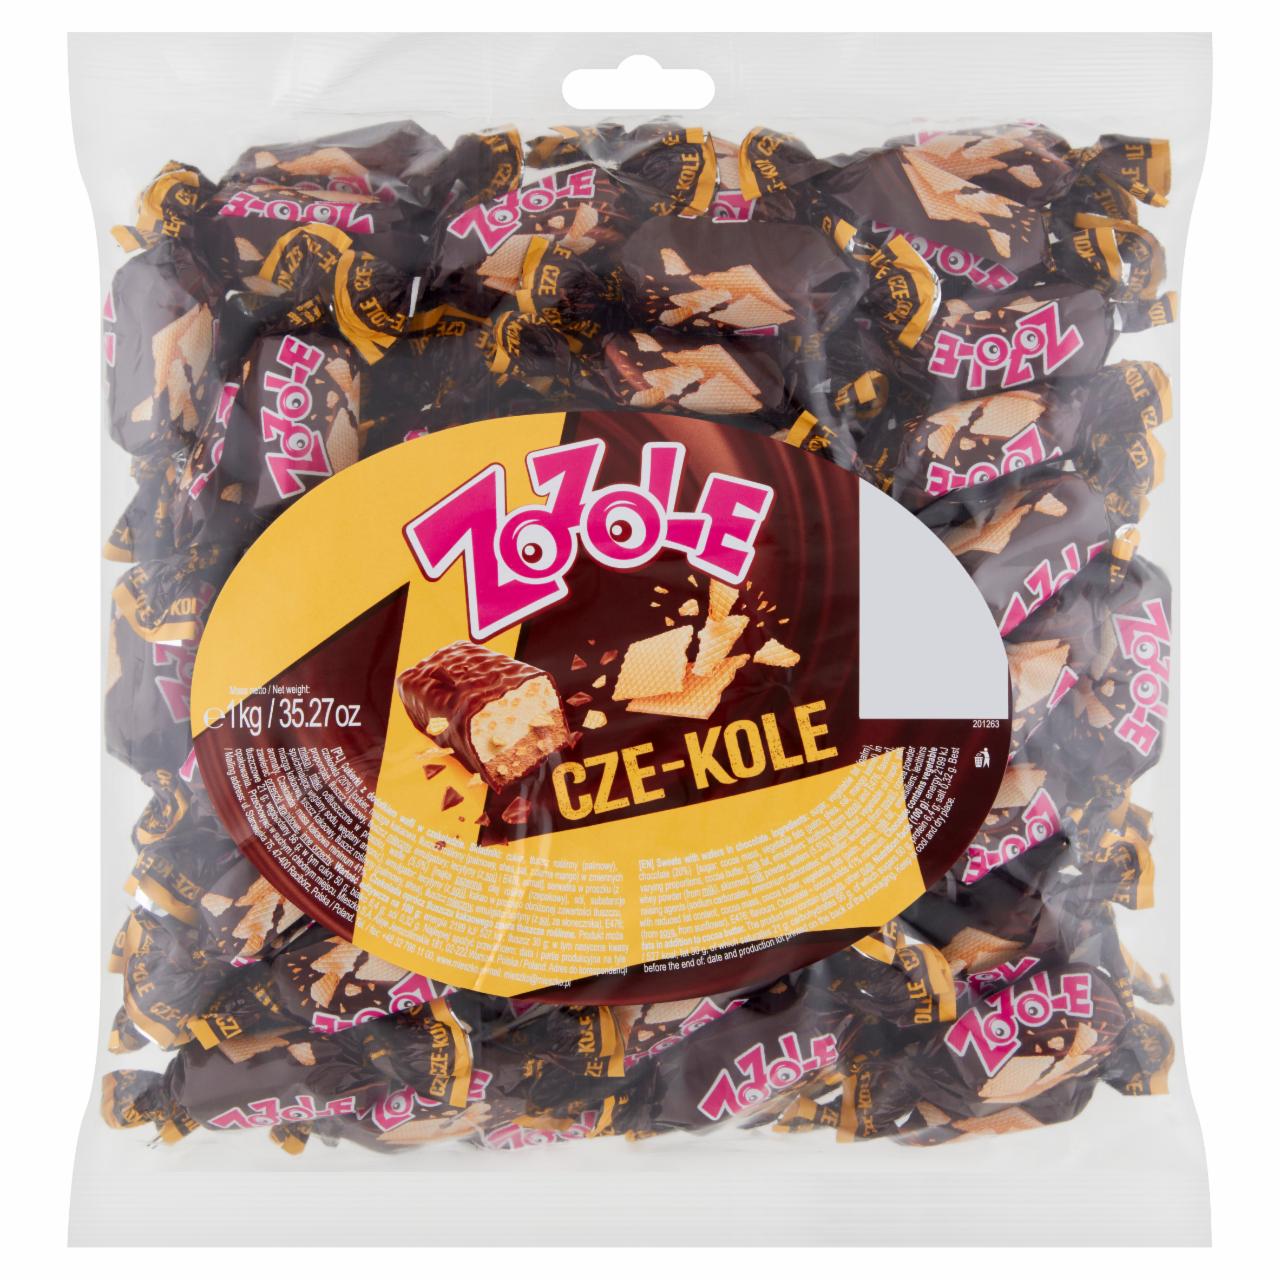 Photo - Zozole Cze-kole Sweetes with Wafers in Chocolate 1 kg